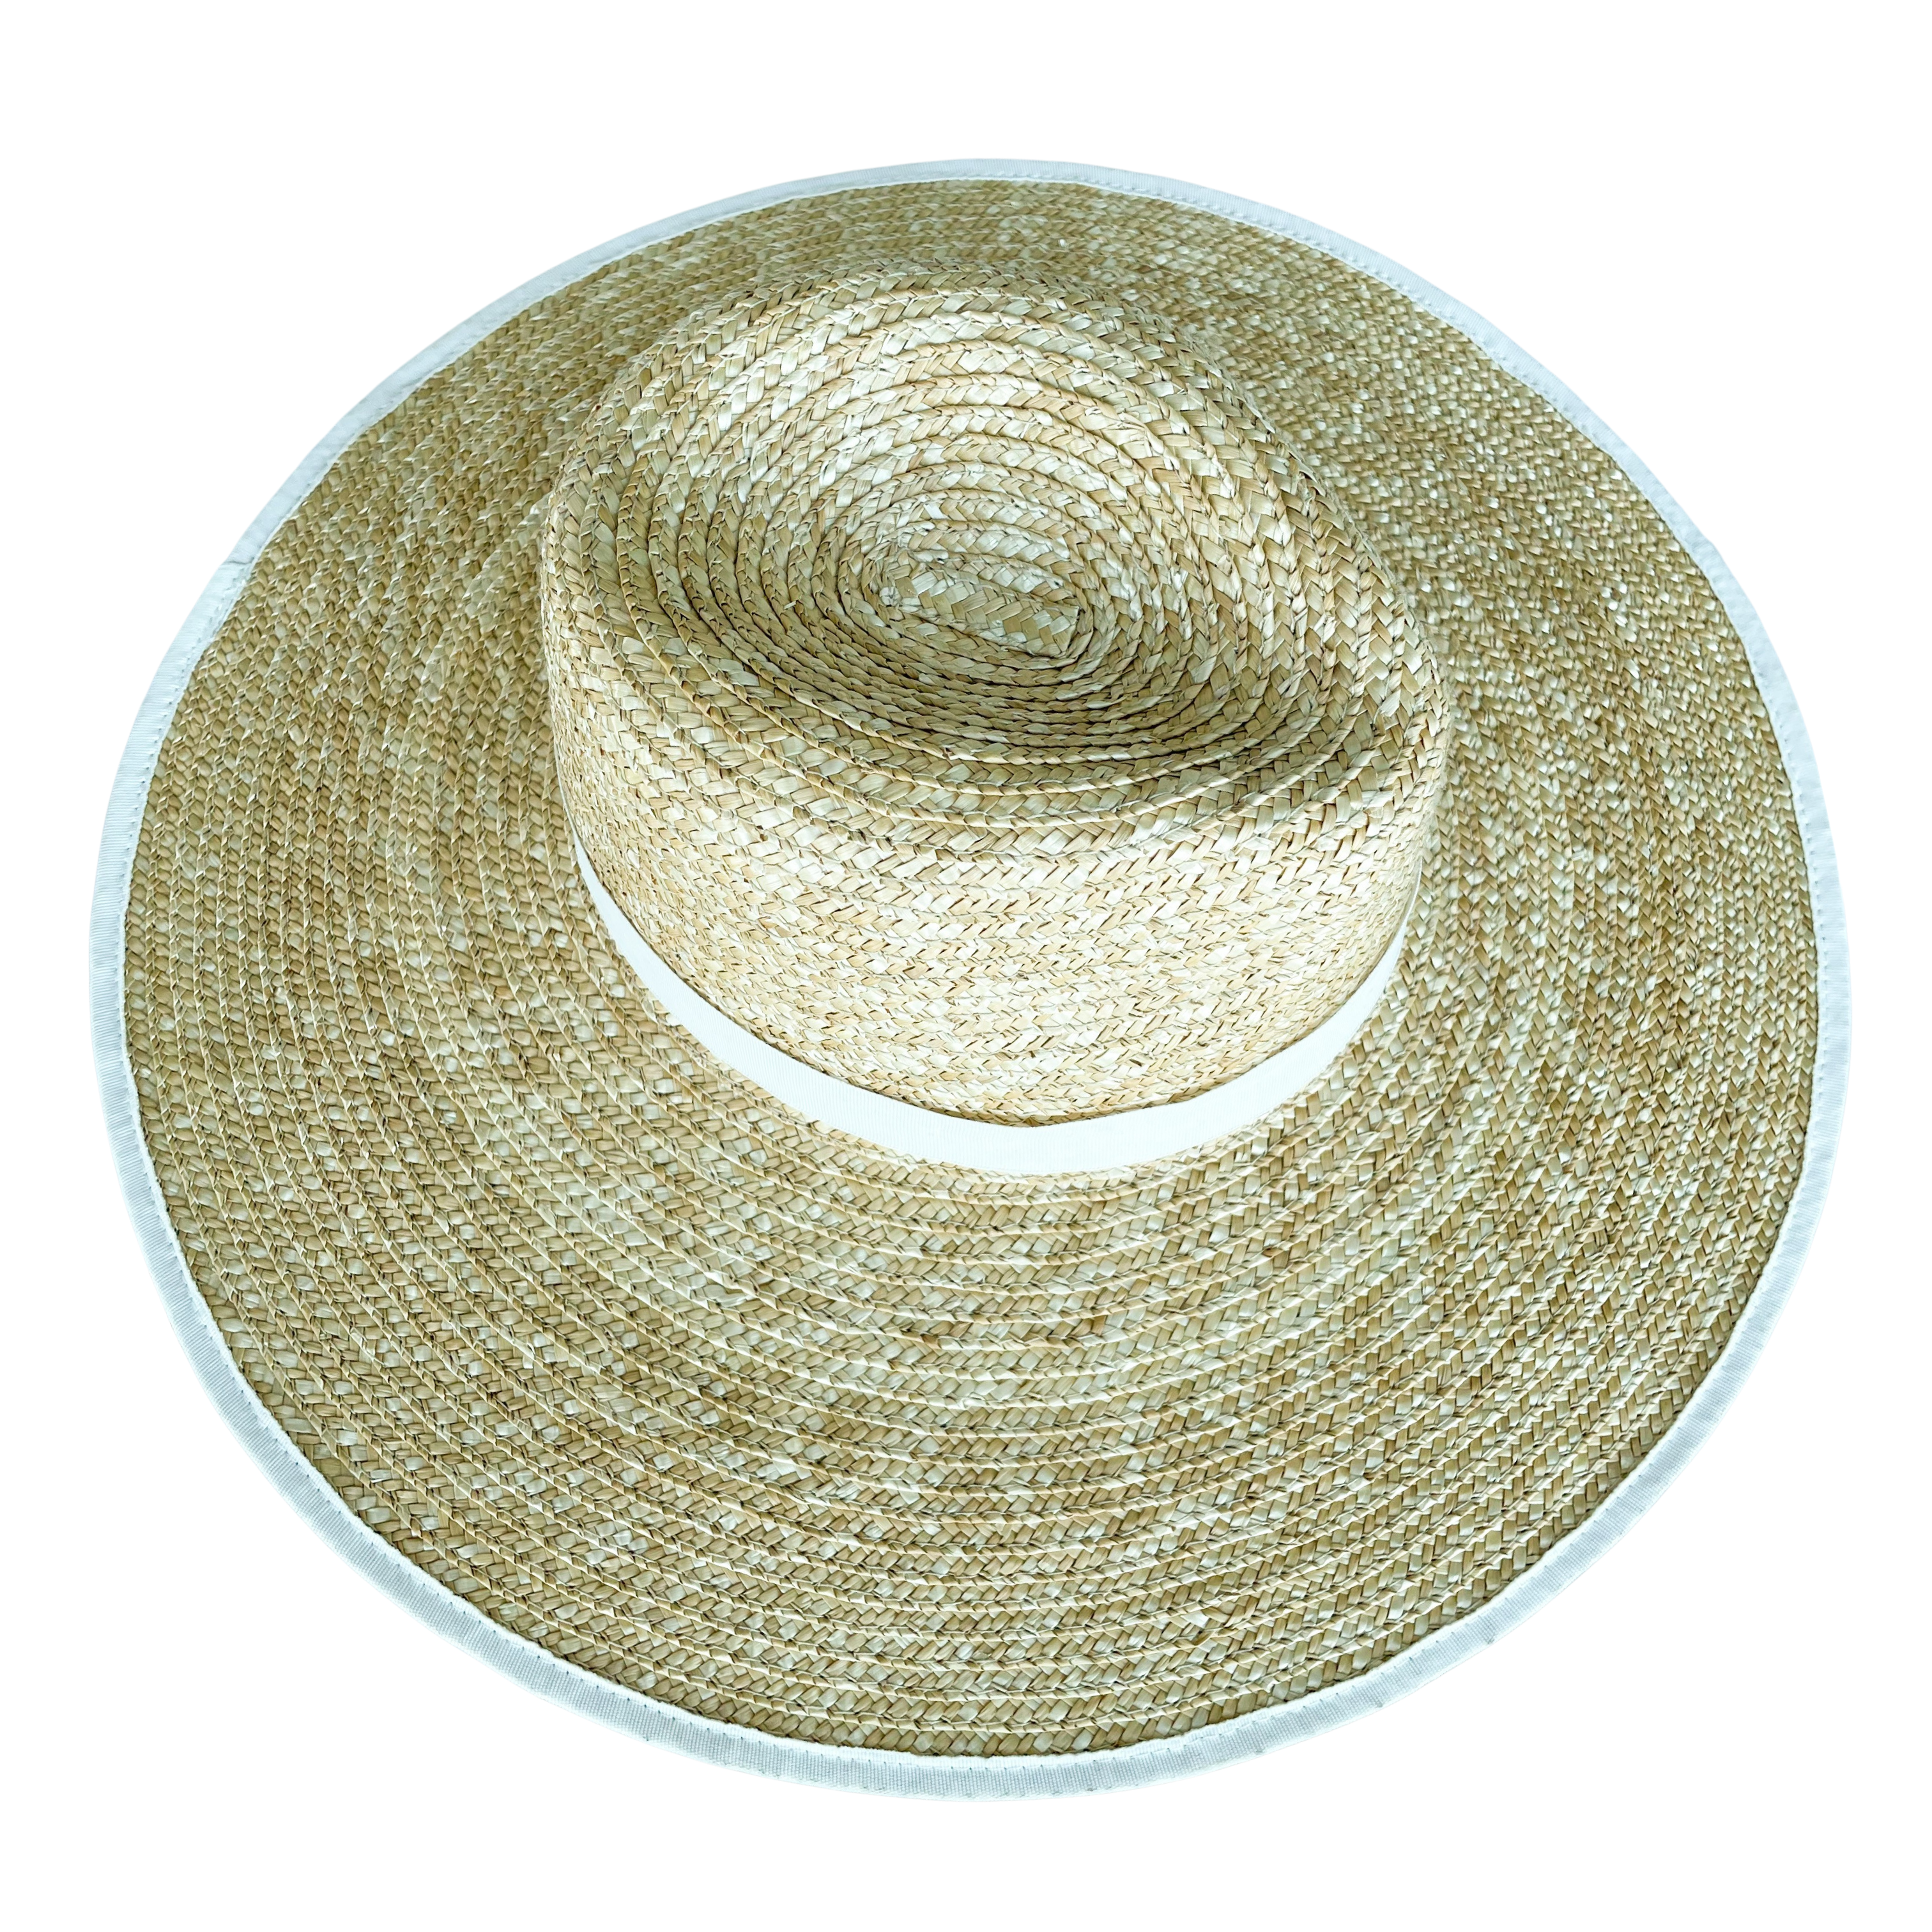 Elise fedora natural straw hat large brim